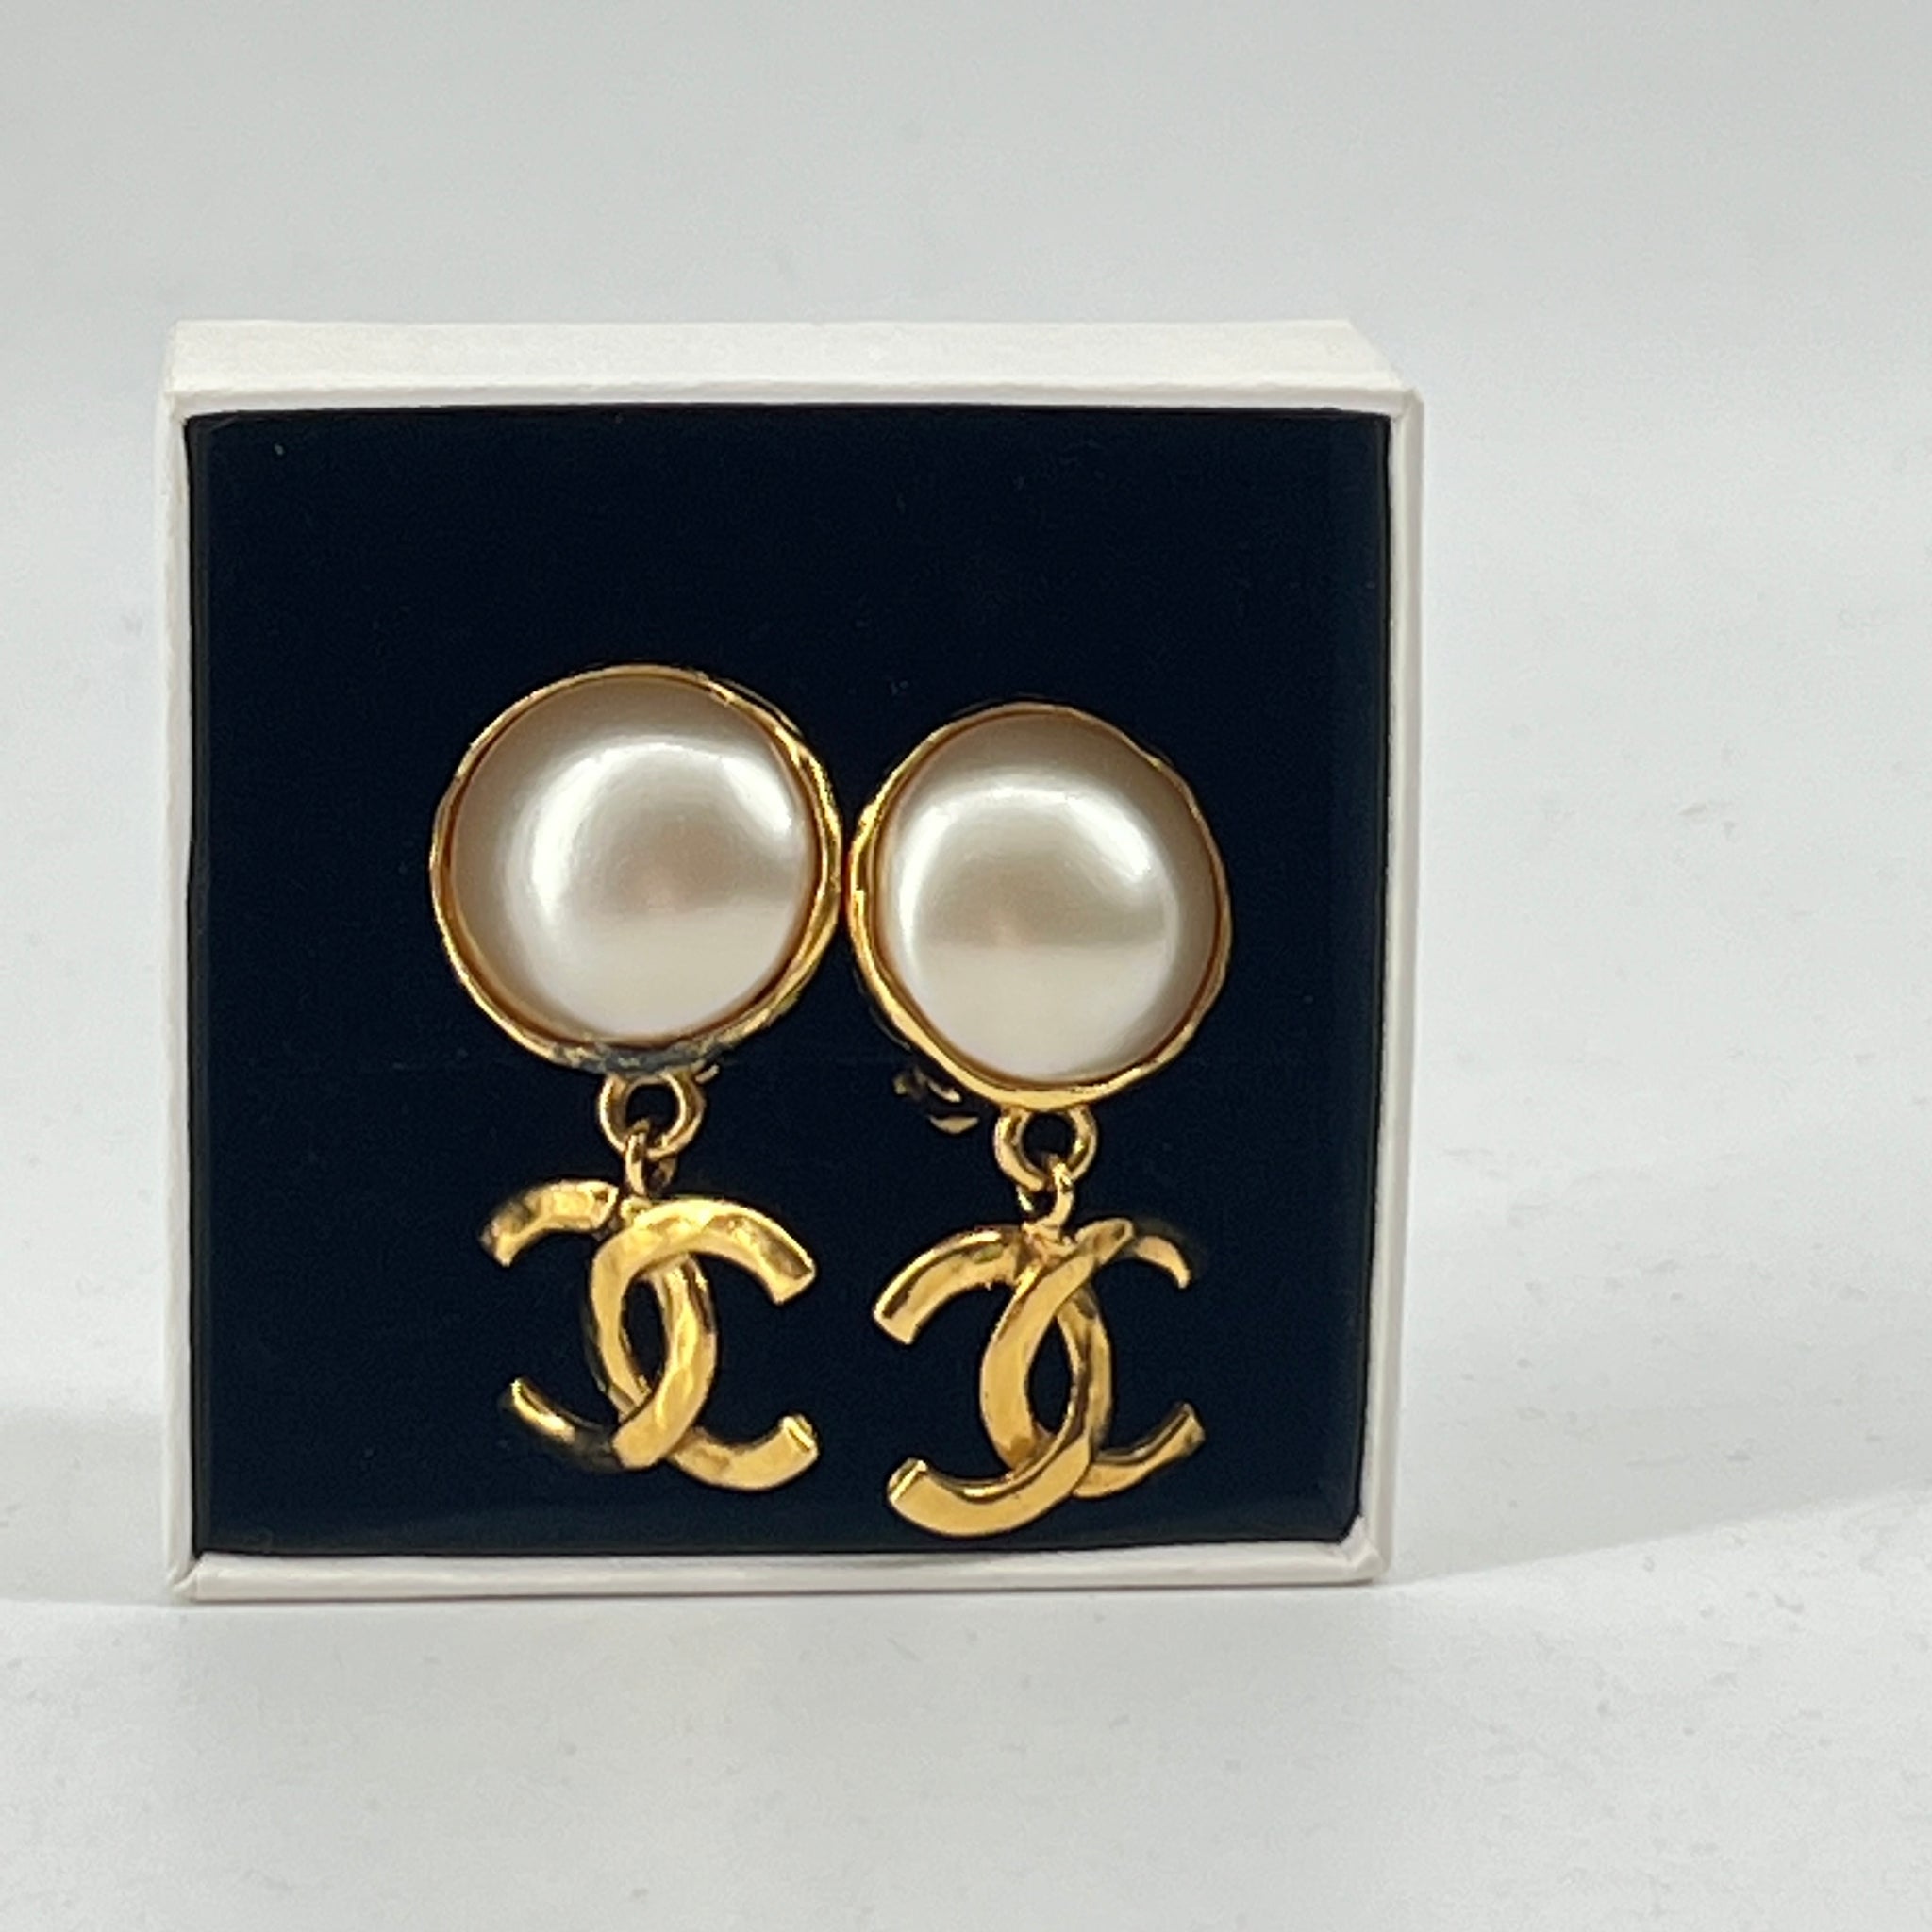 CC logo vintage earrings. Website search for X52088 #sheerroom